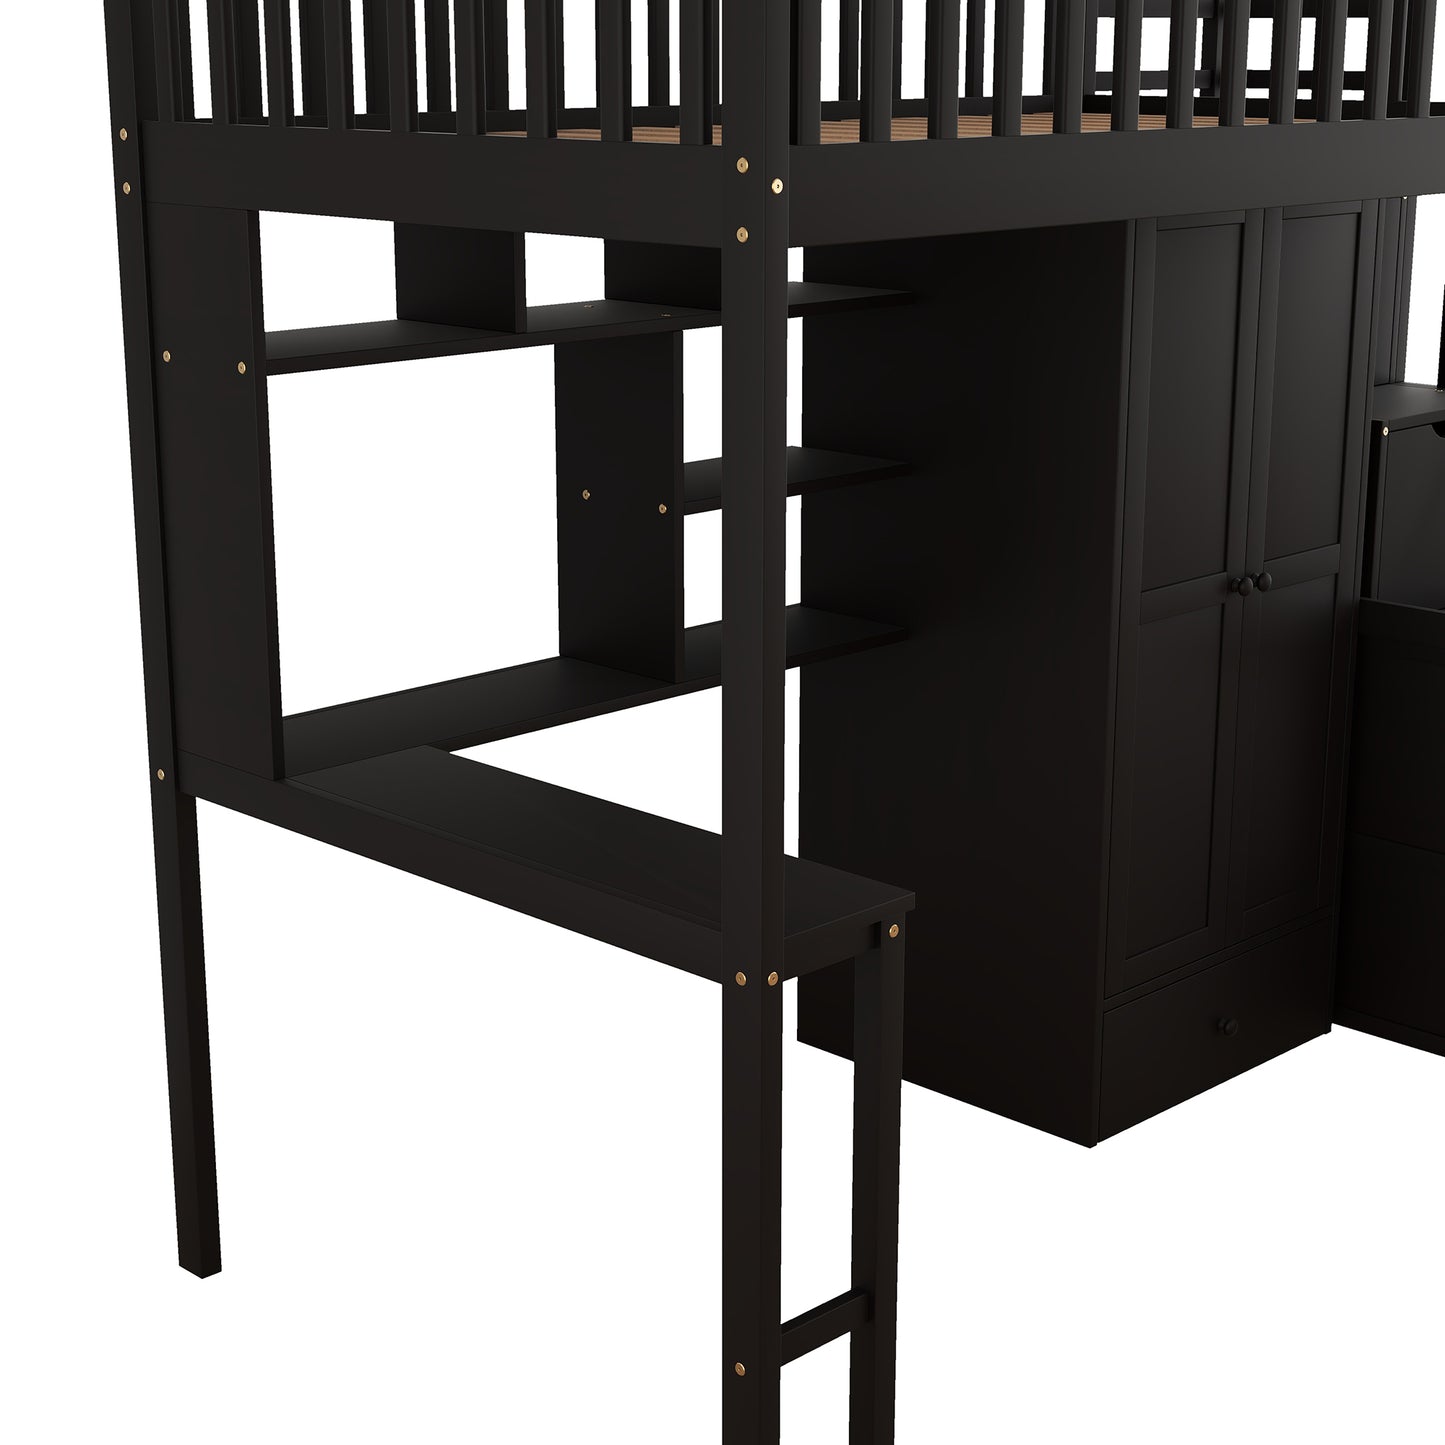 Twin size Loft Bed with Bookshelf,Drawers,Desk,and Wardrobe-Espresso